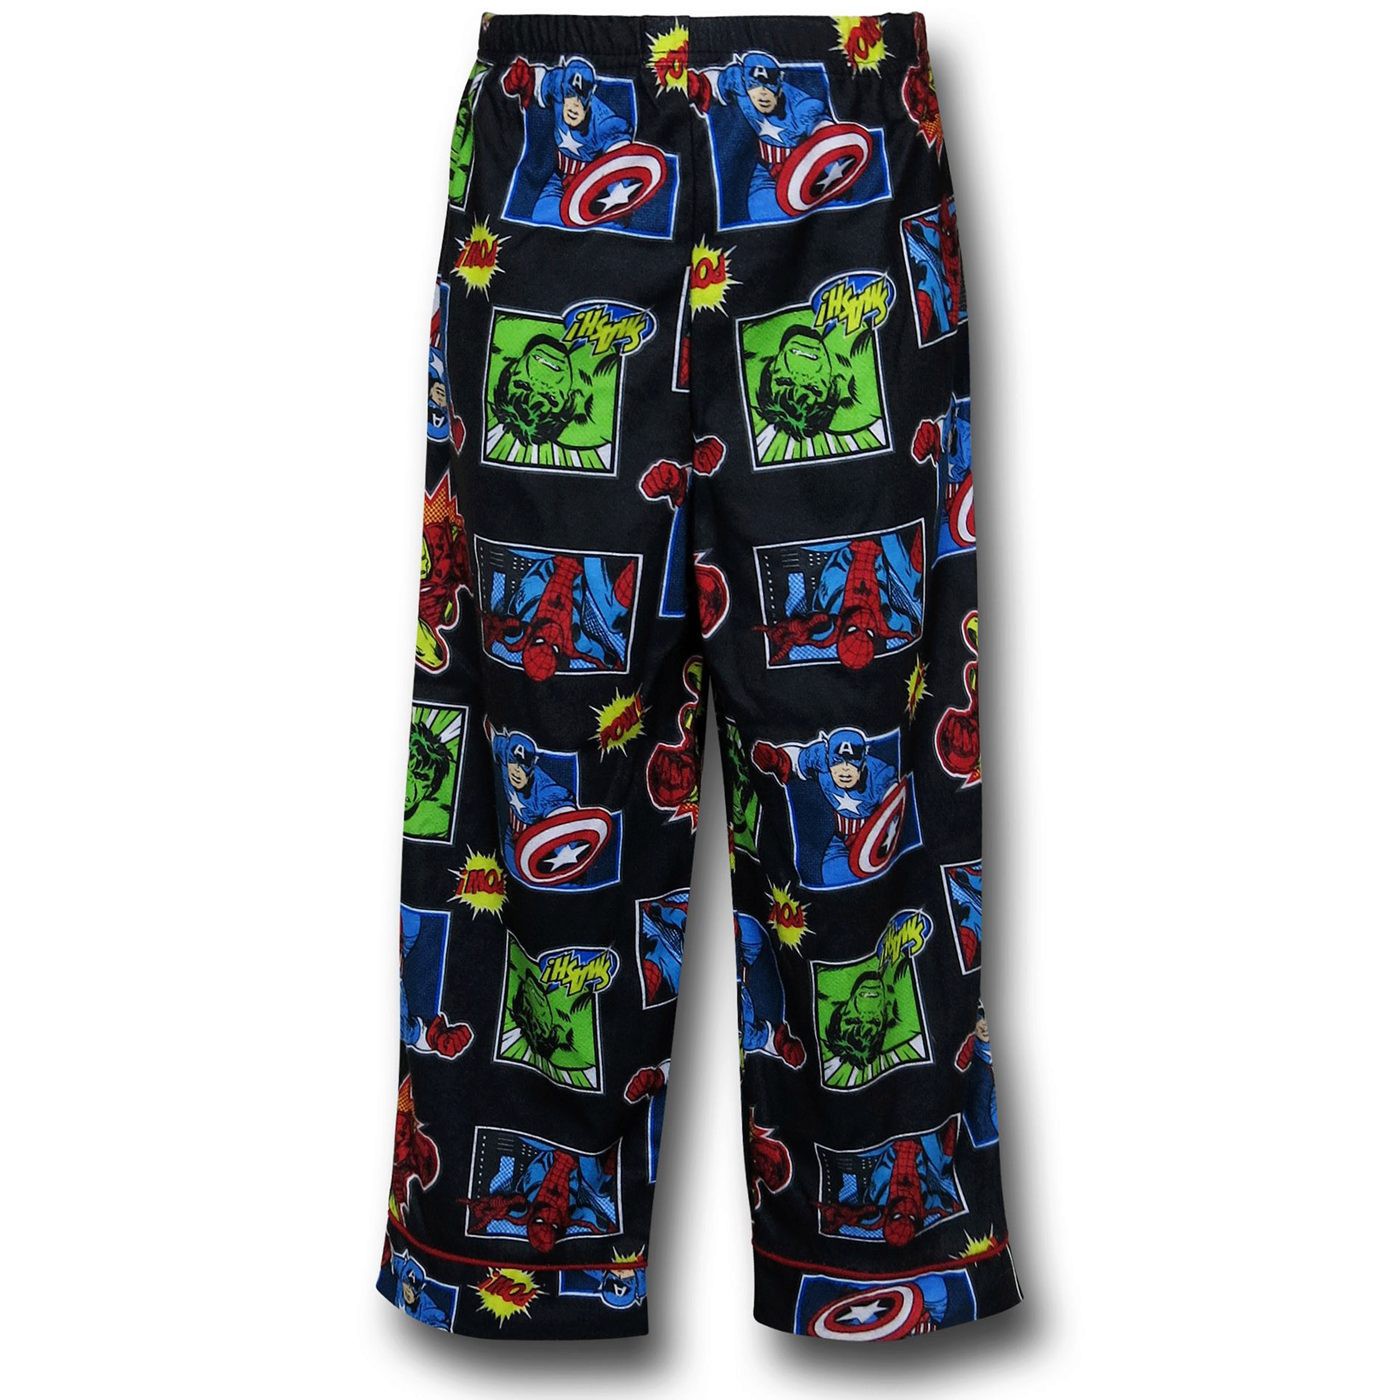 Avengers Jersey Coat Kids Pajama Set